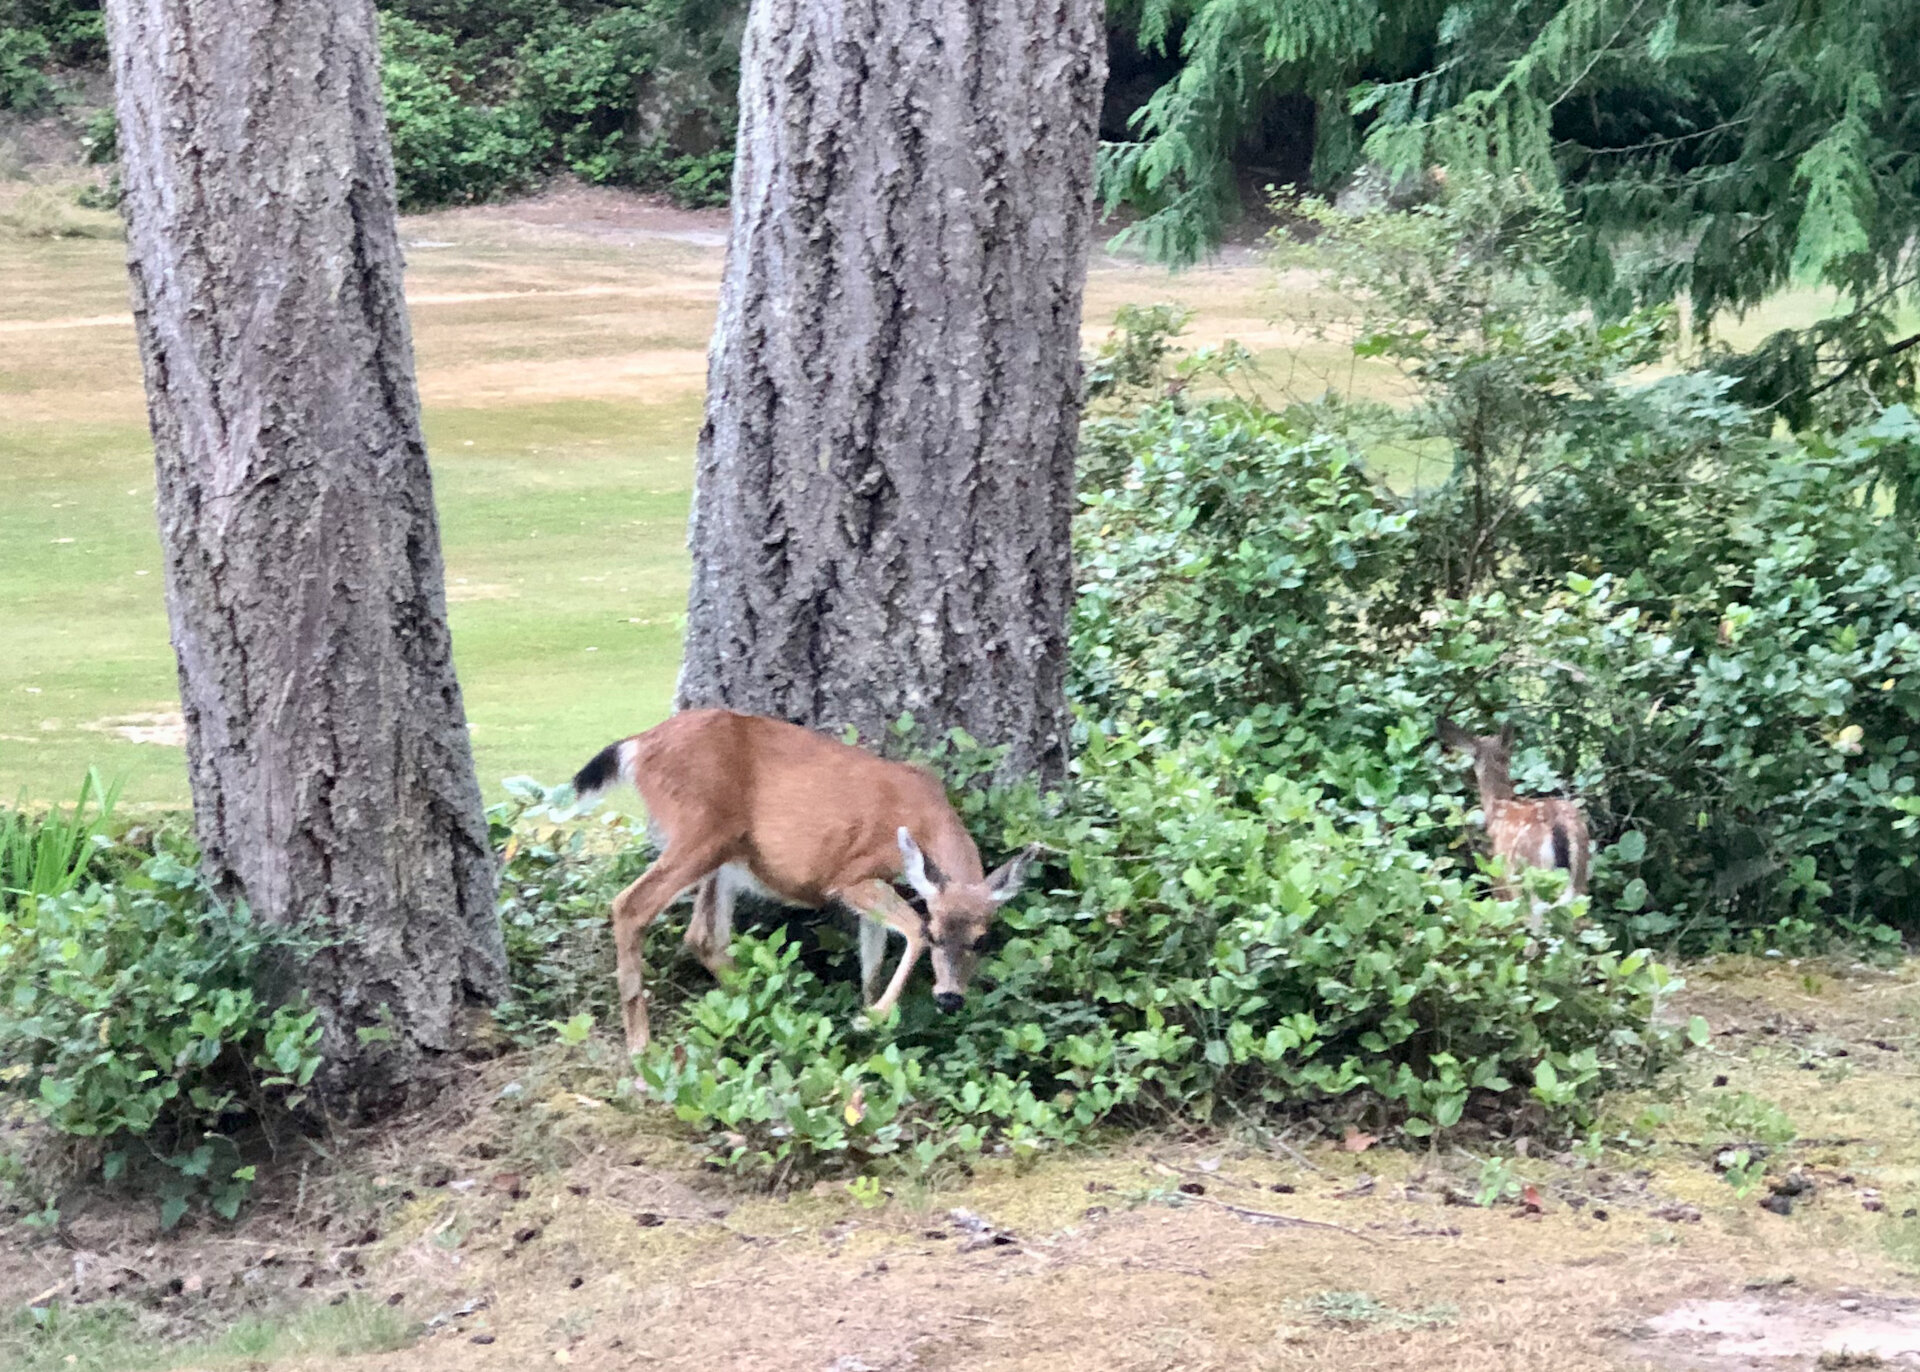 Early August - Deer (mageddon)